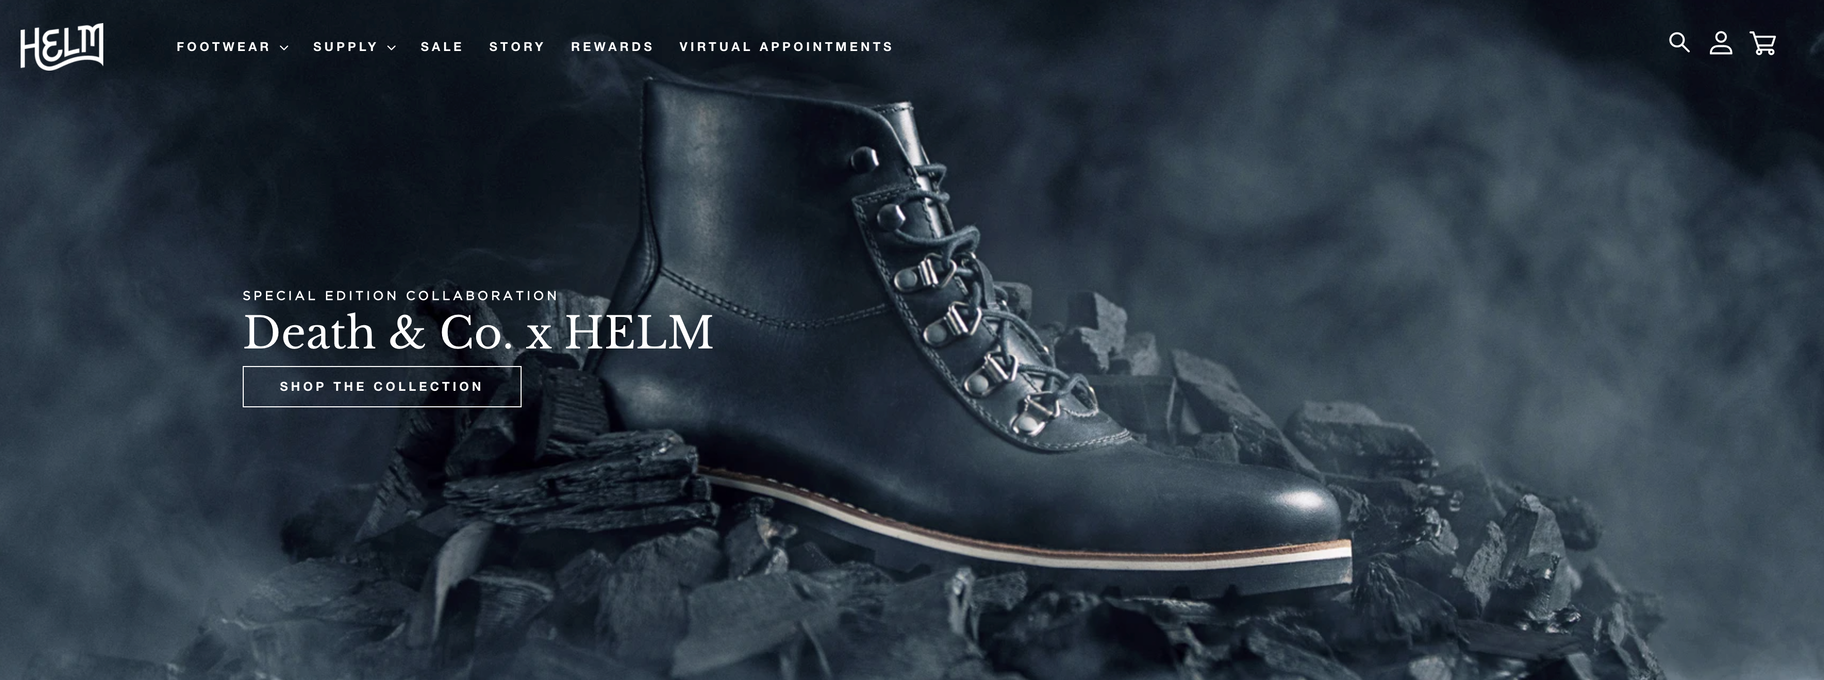 helm boots shop online